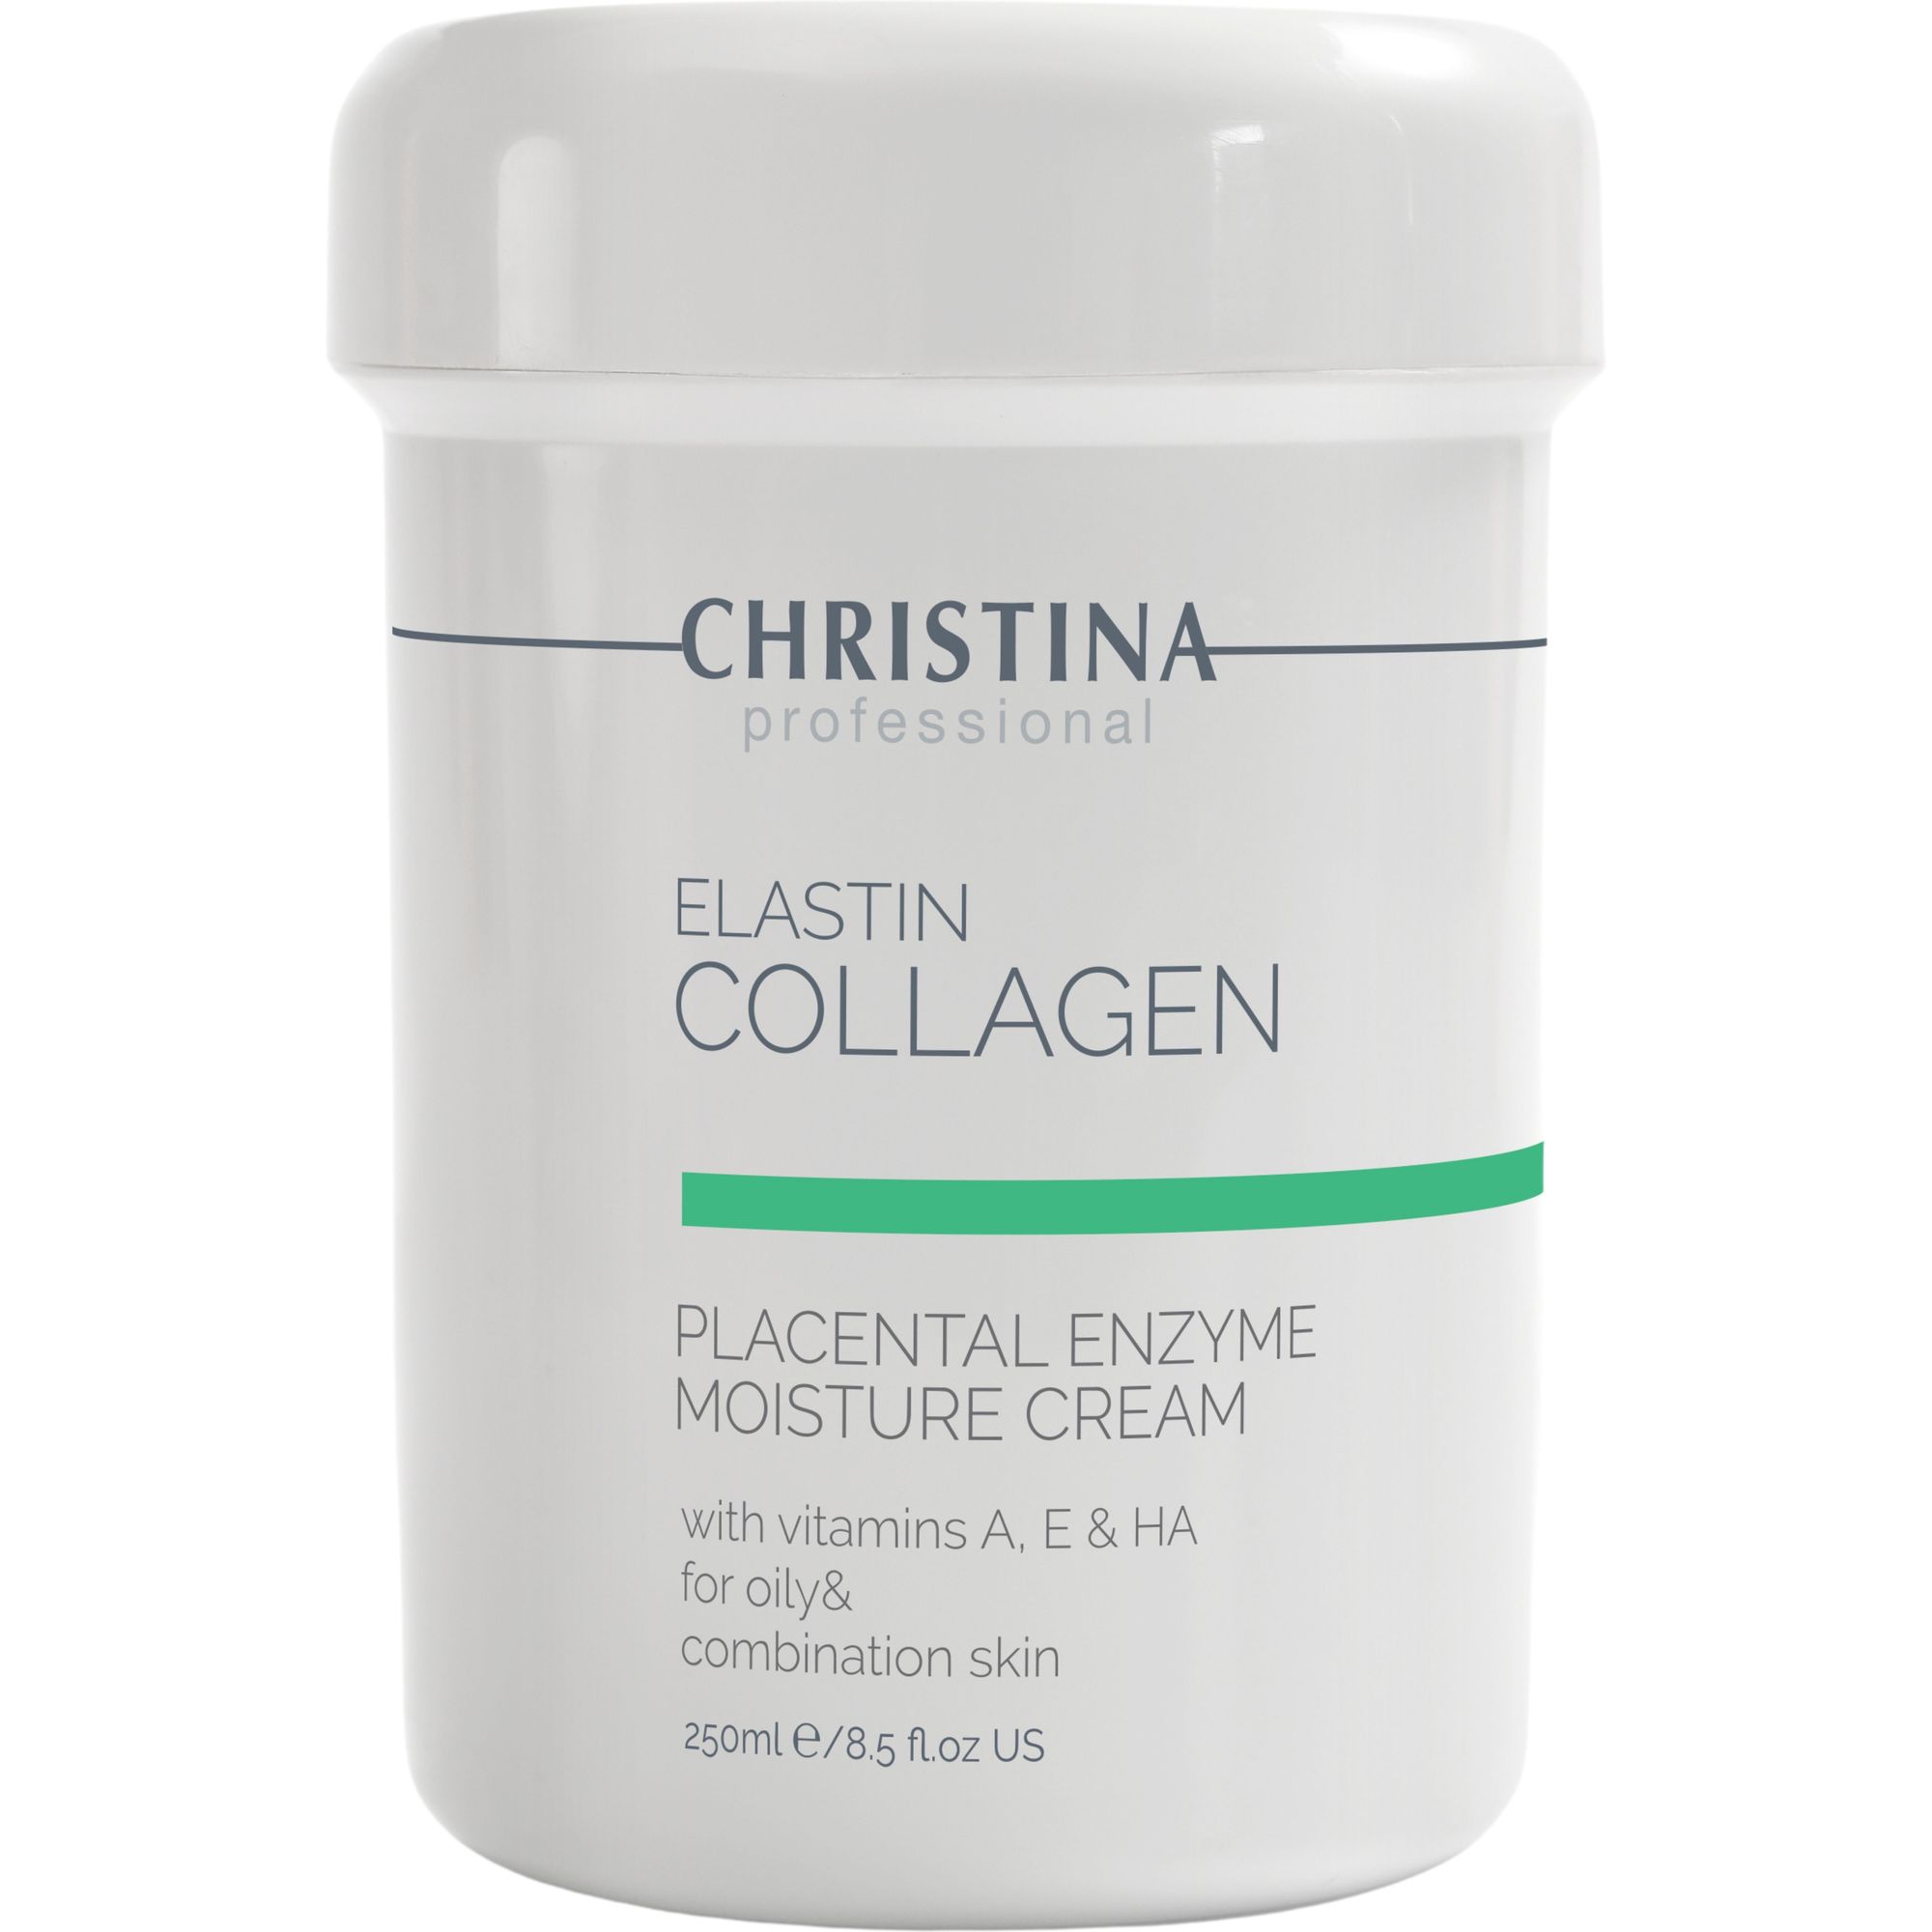 Увлажняющий крем для жирной кожи Christina Elastin Collagen Placental Enzyme Moisture Cream with Vitamins A, E & HA 250 мл - фото 1